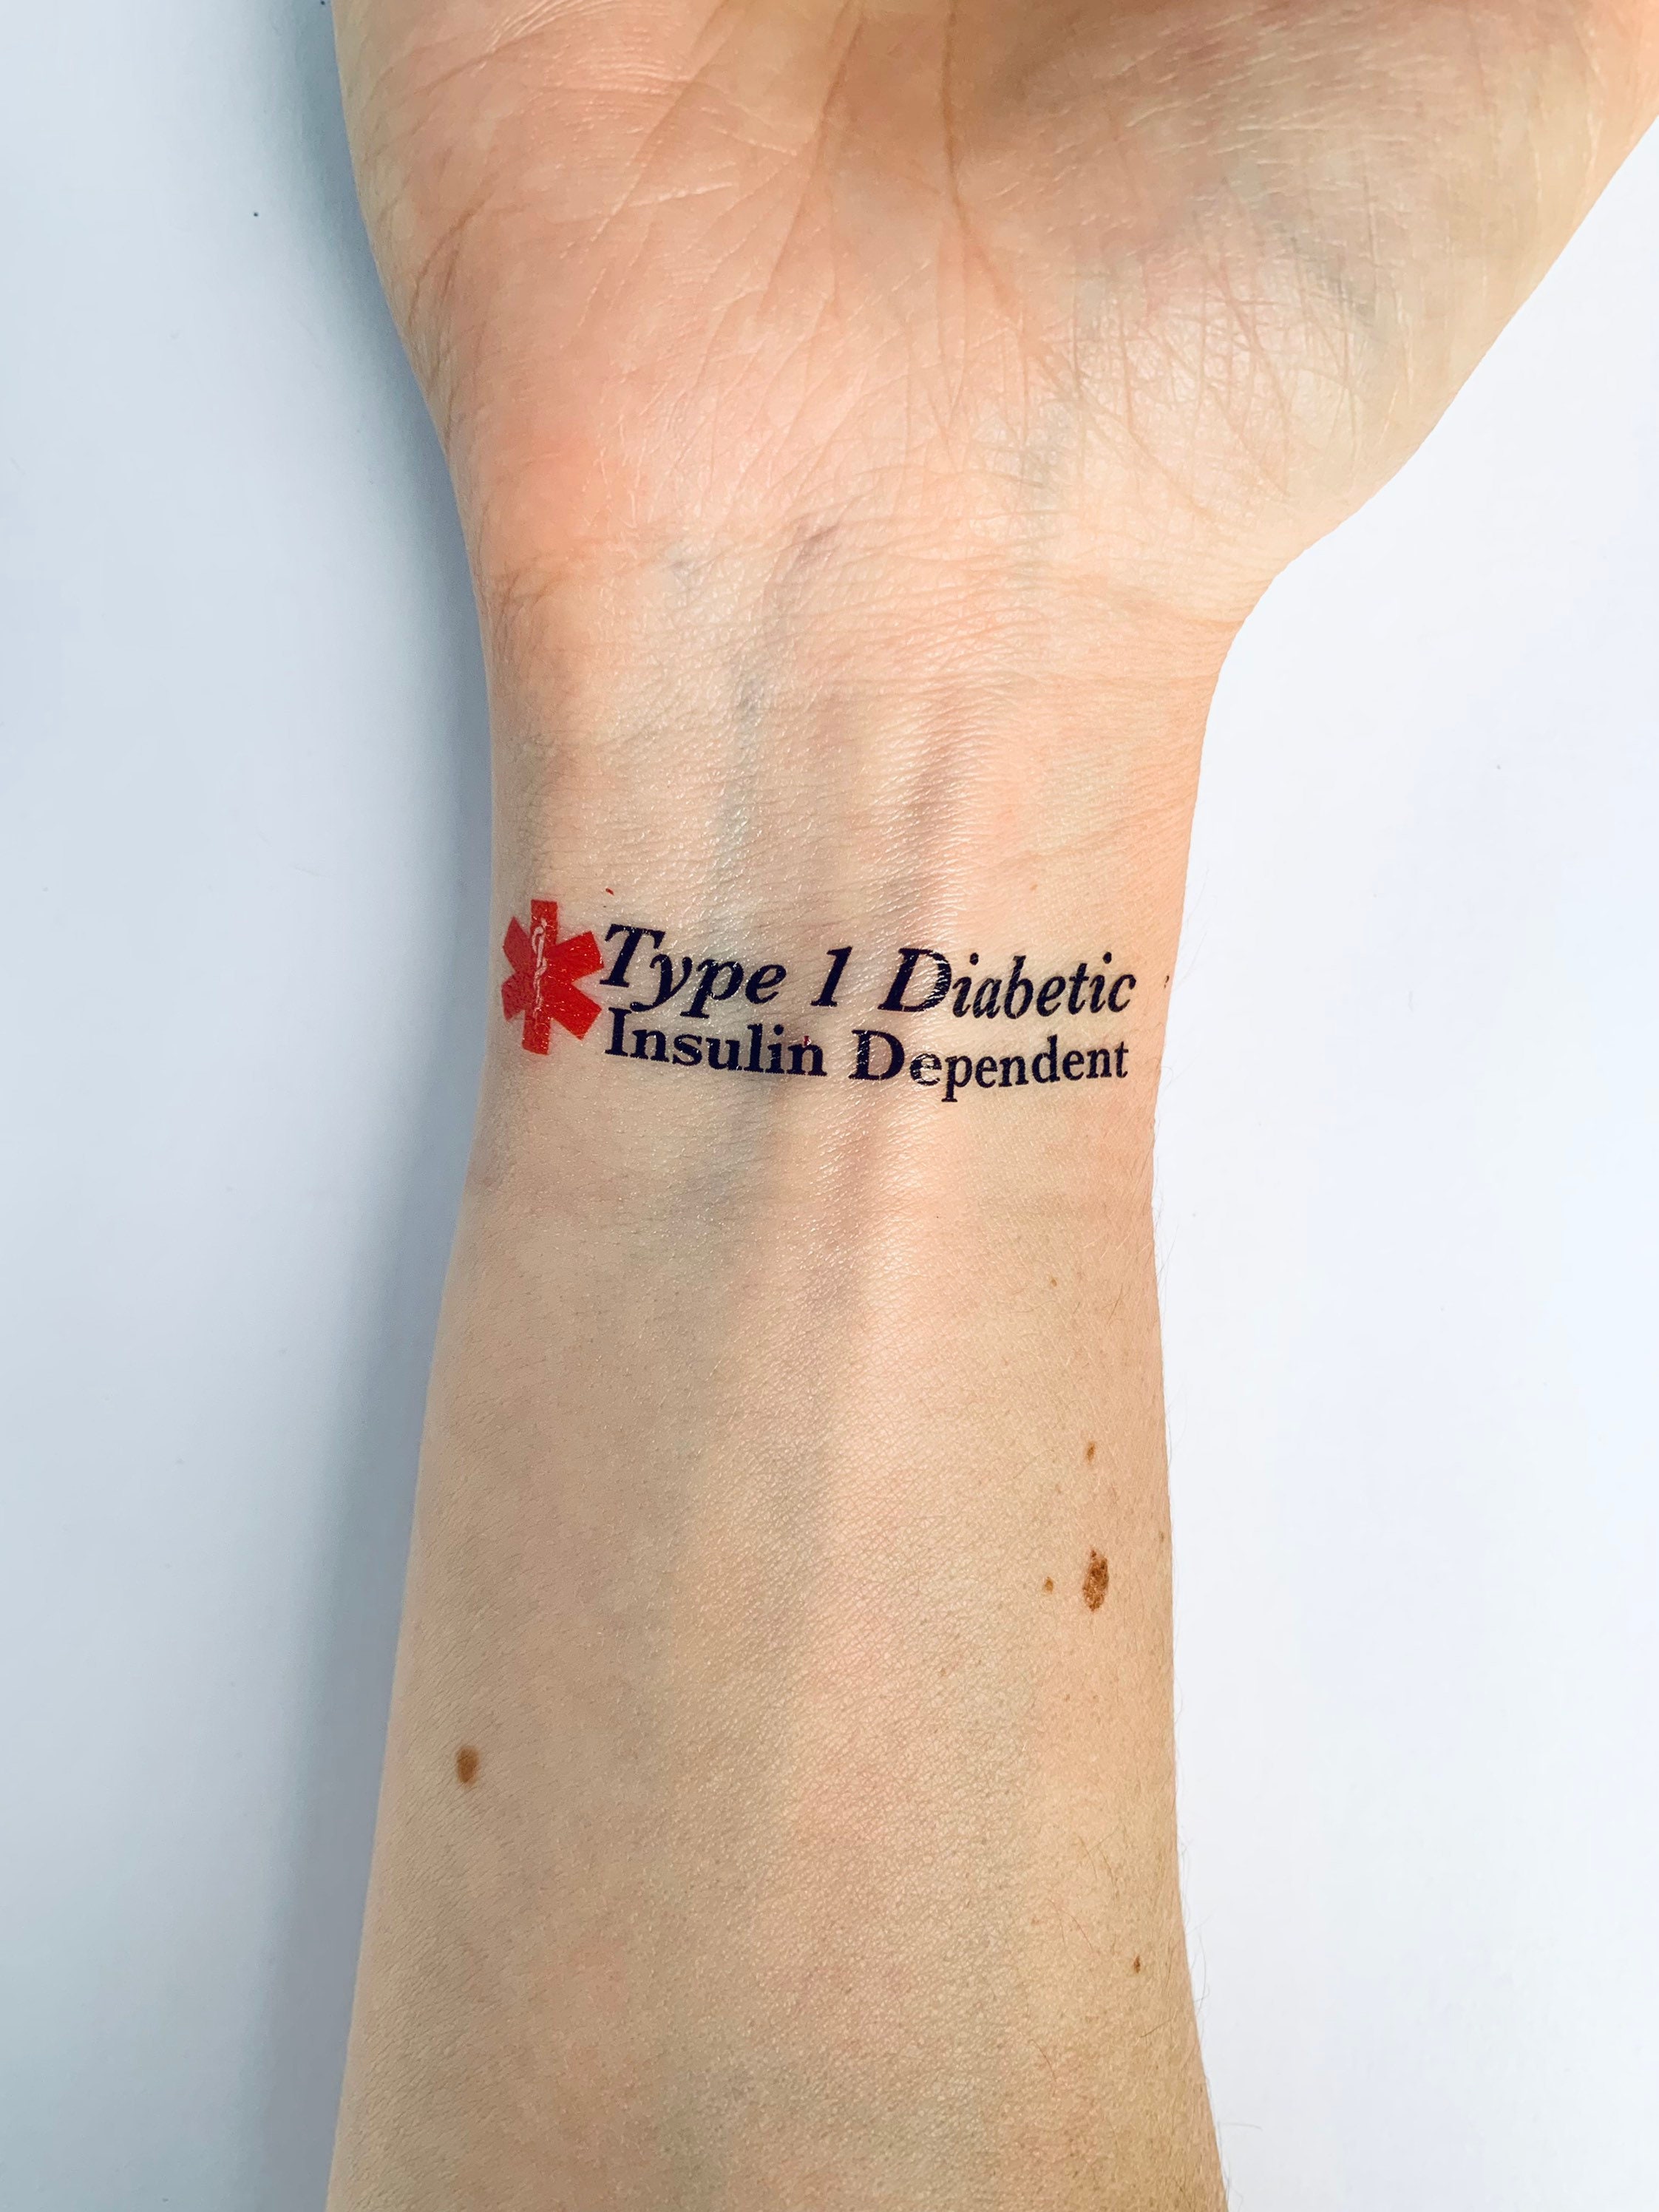 Getting a Tattoo | Diabetes Forum • The Global Diabetes Community